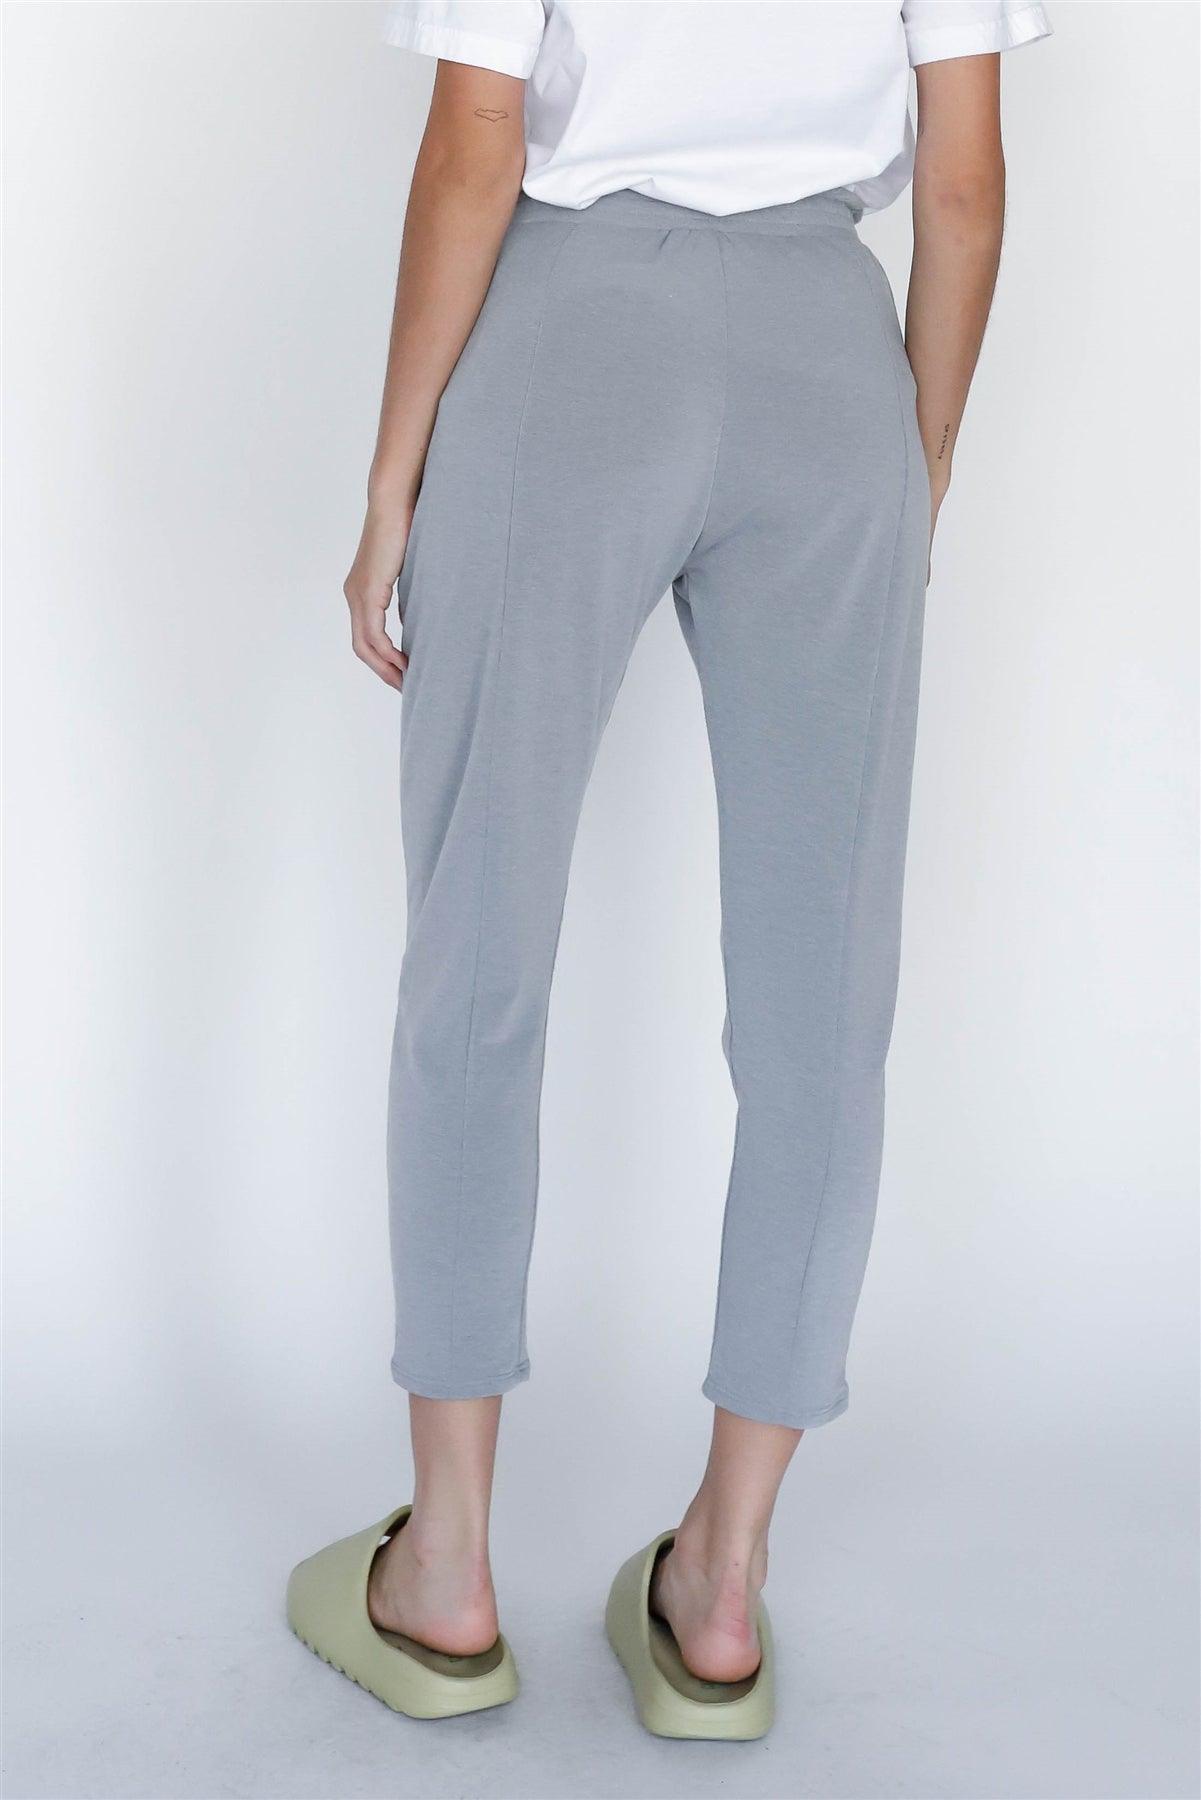 Heather Grey Front Pocket Detail High Waist Jogger Pants /1-1-1